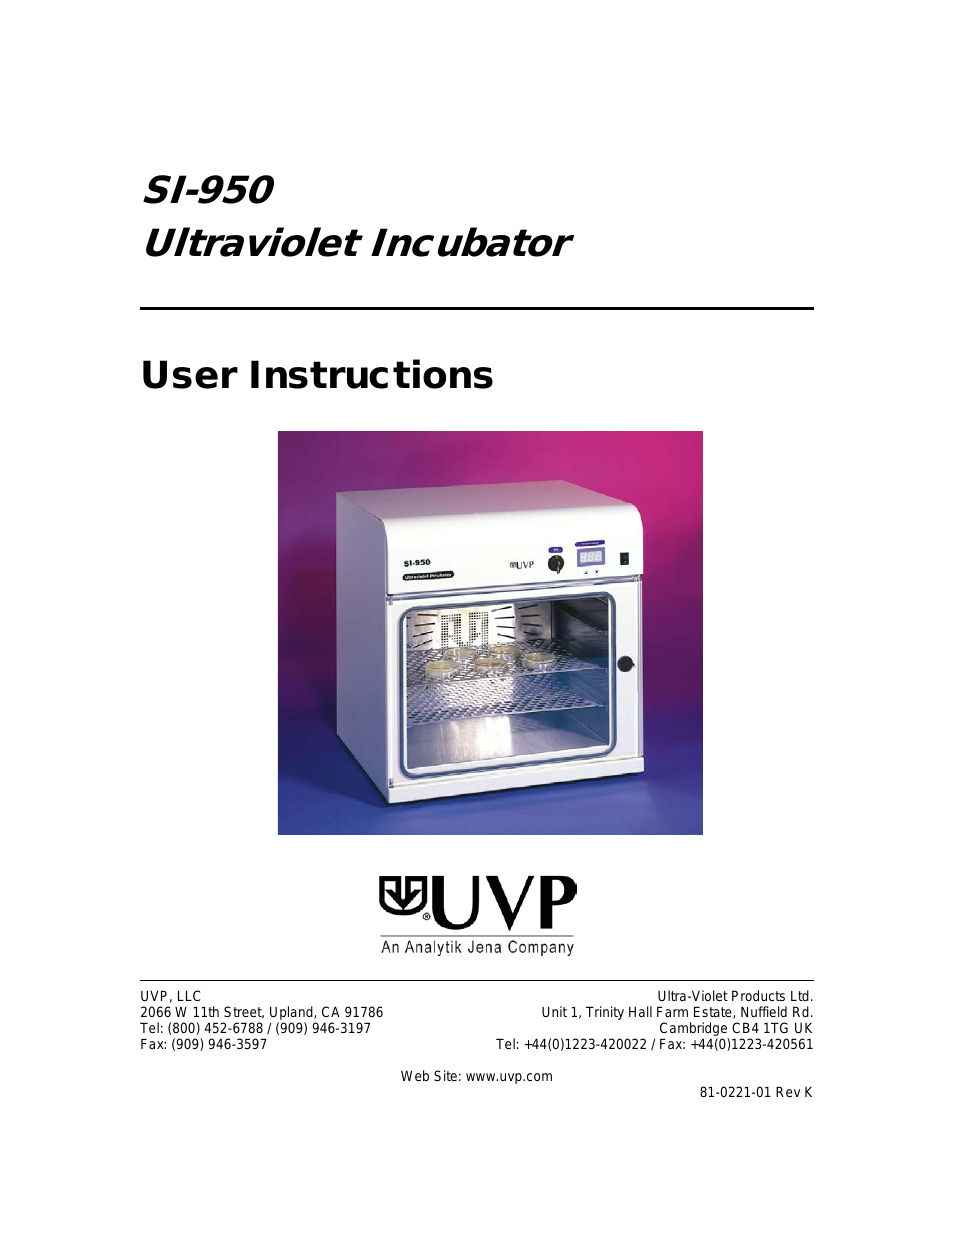 SI-950 Ultraviolet Incubator